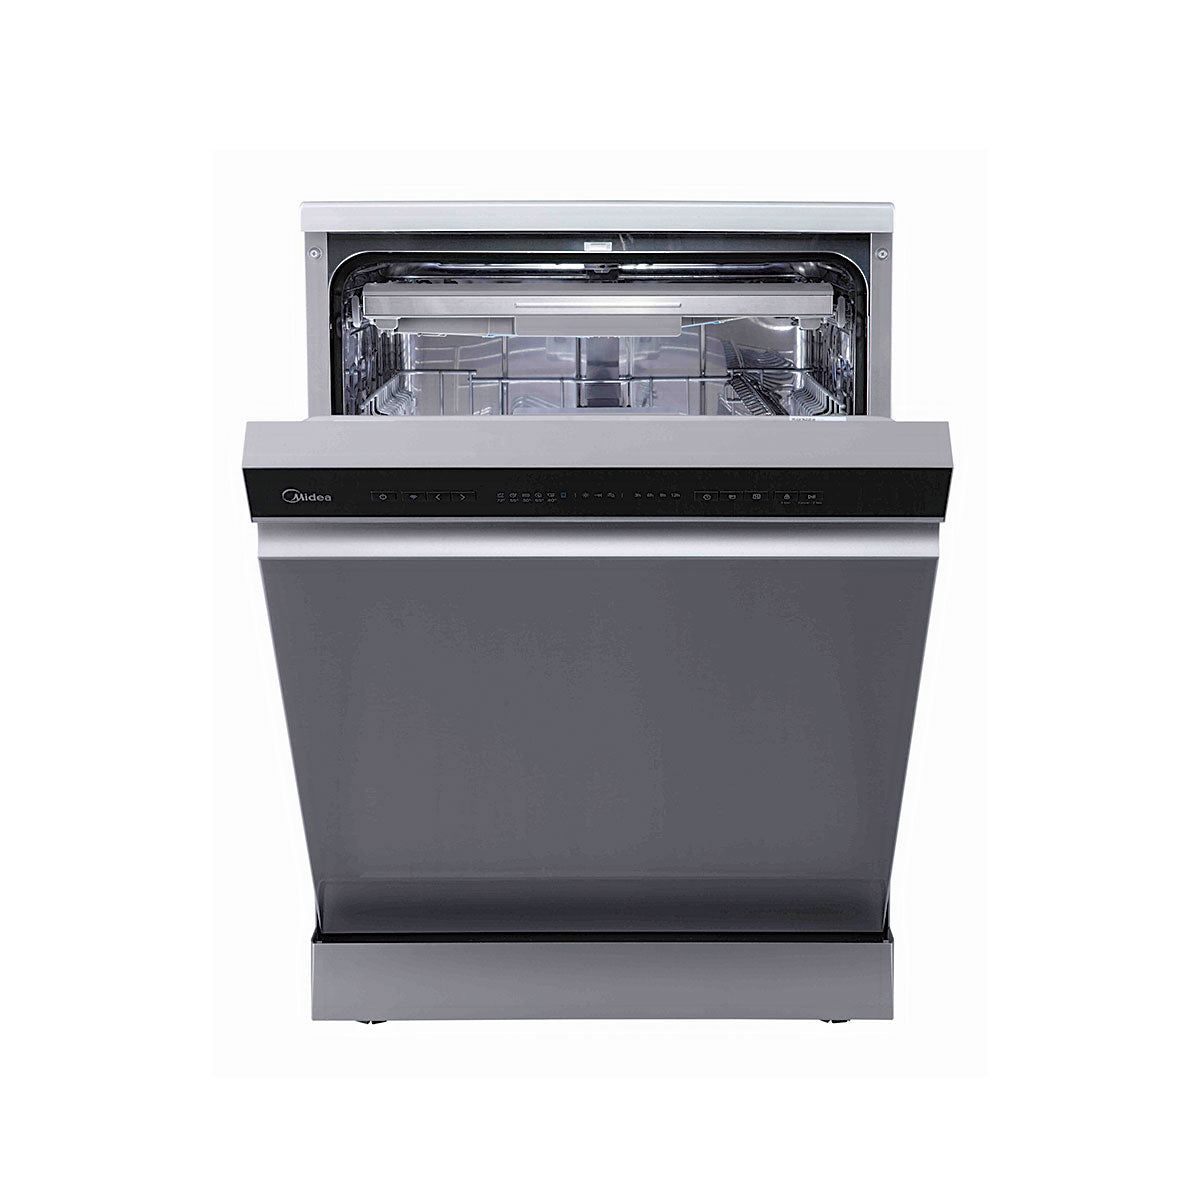 Midea Freestanding Dishwasher ӏ 15 Place Settings ӏ 9 program wash ӏ 60cm